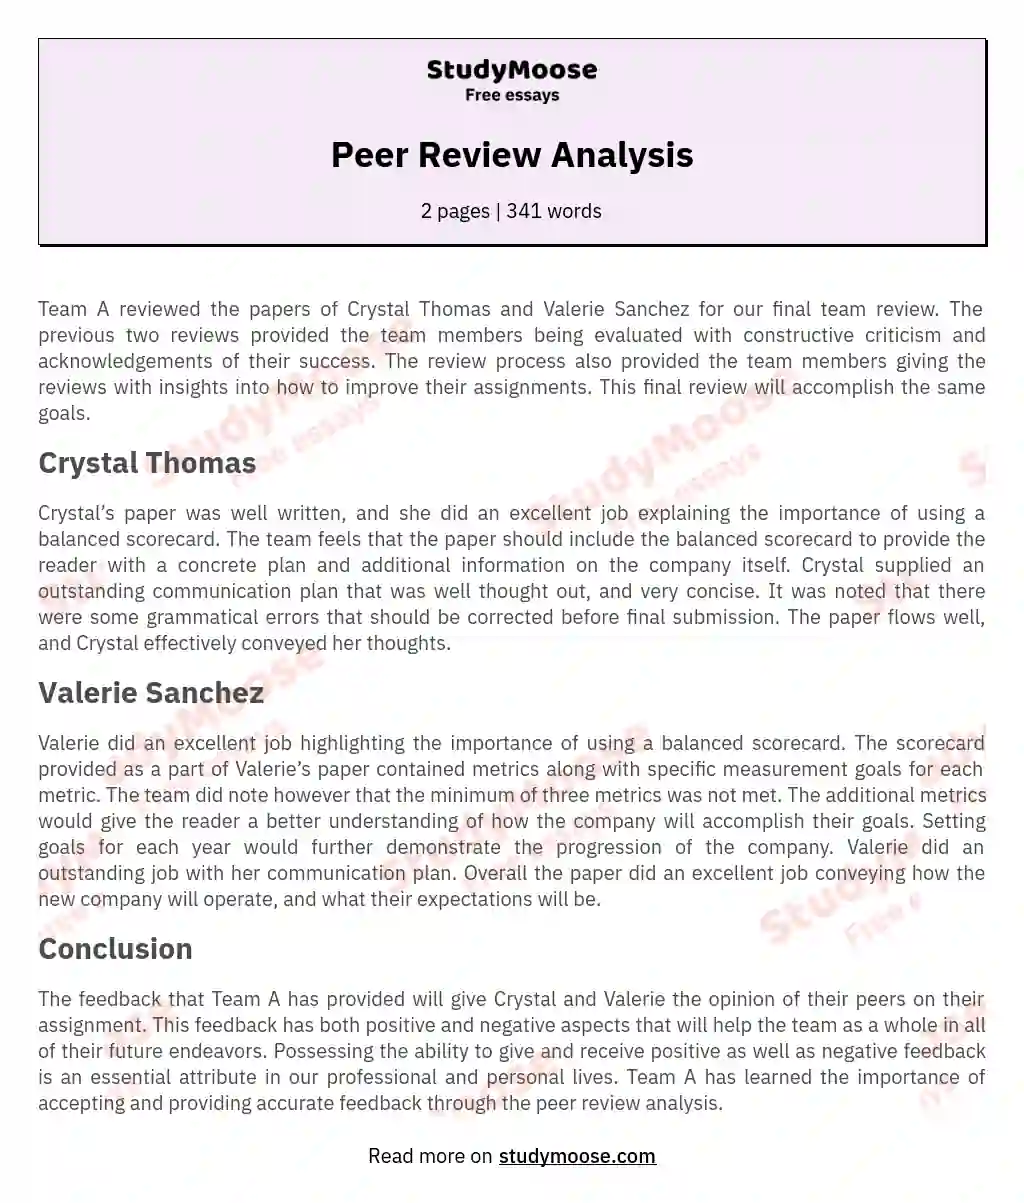 Peer Review Analysis essay